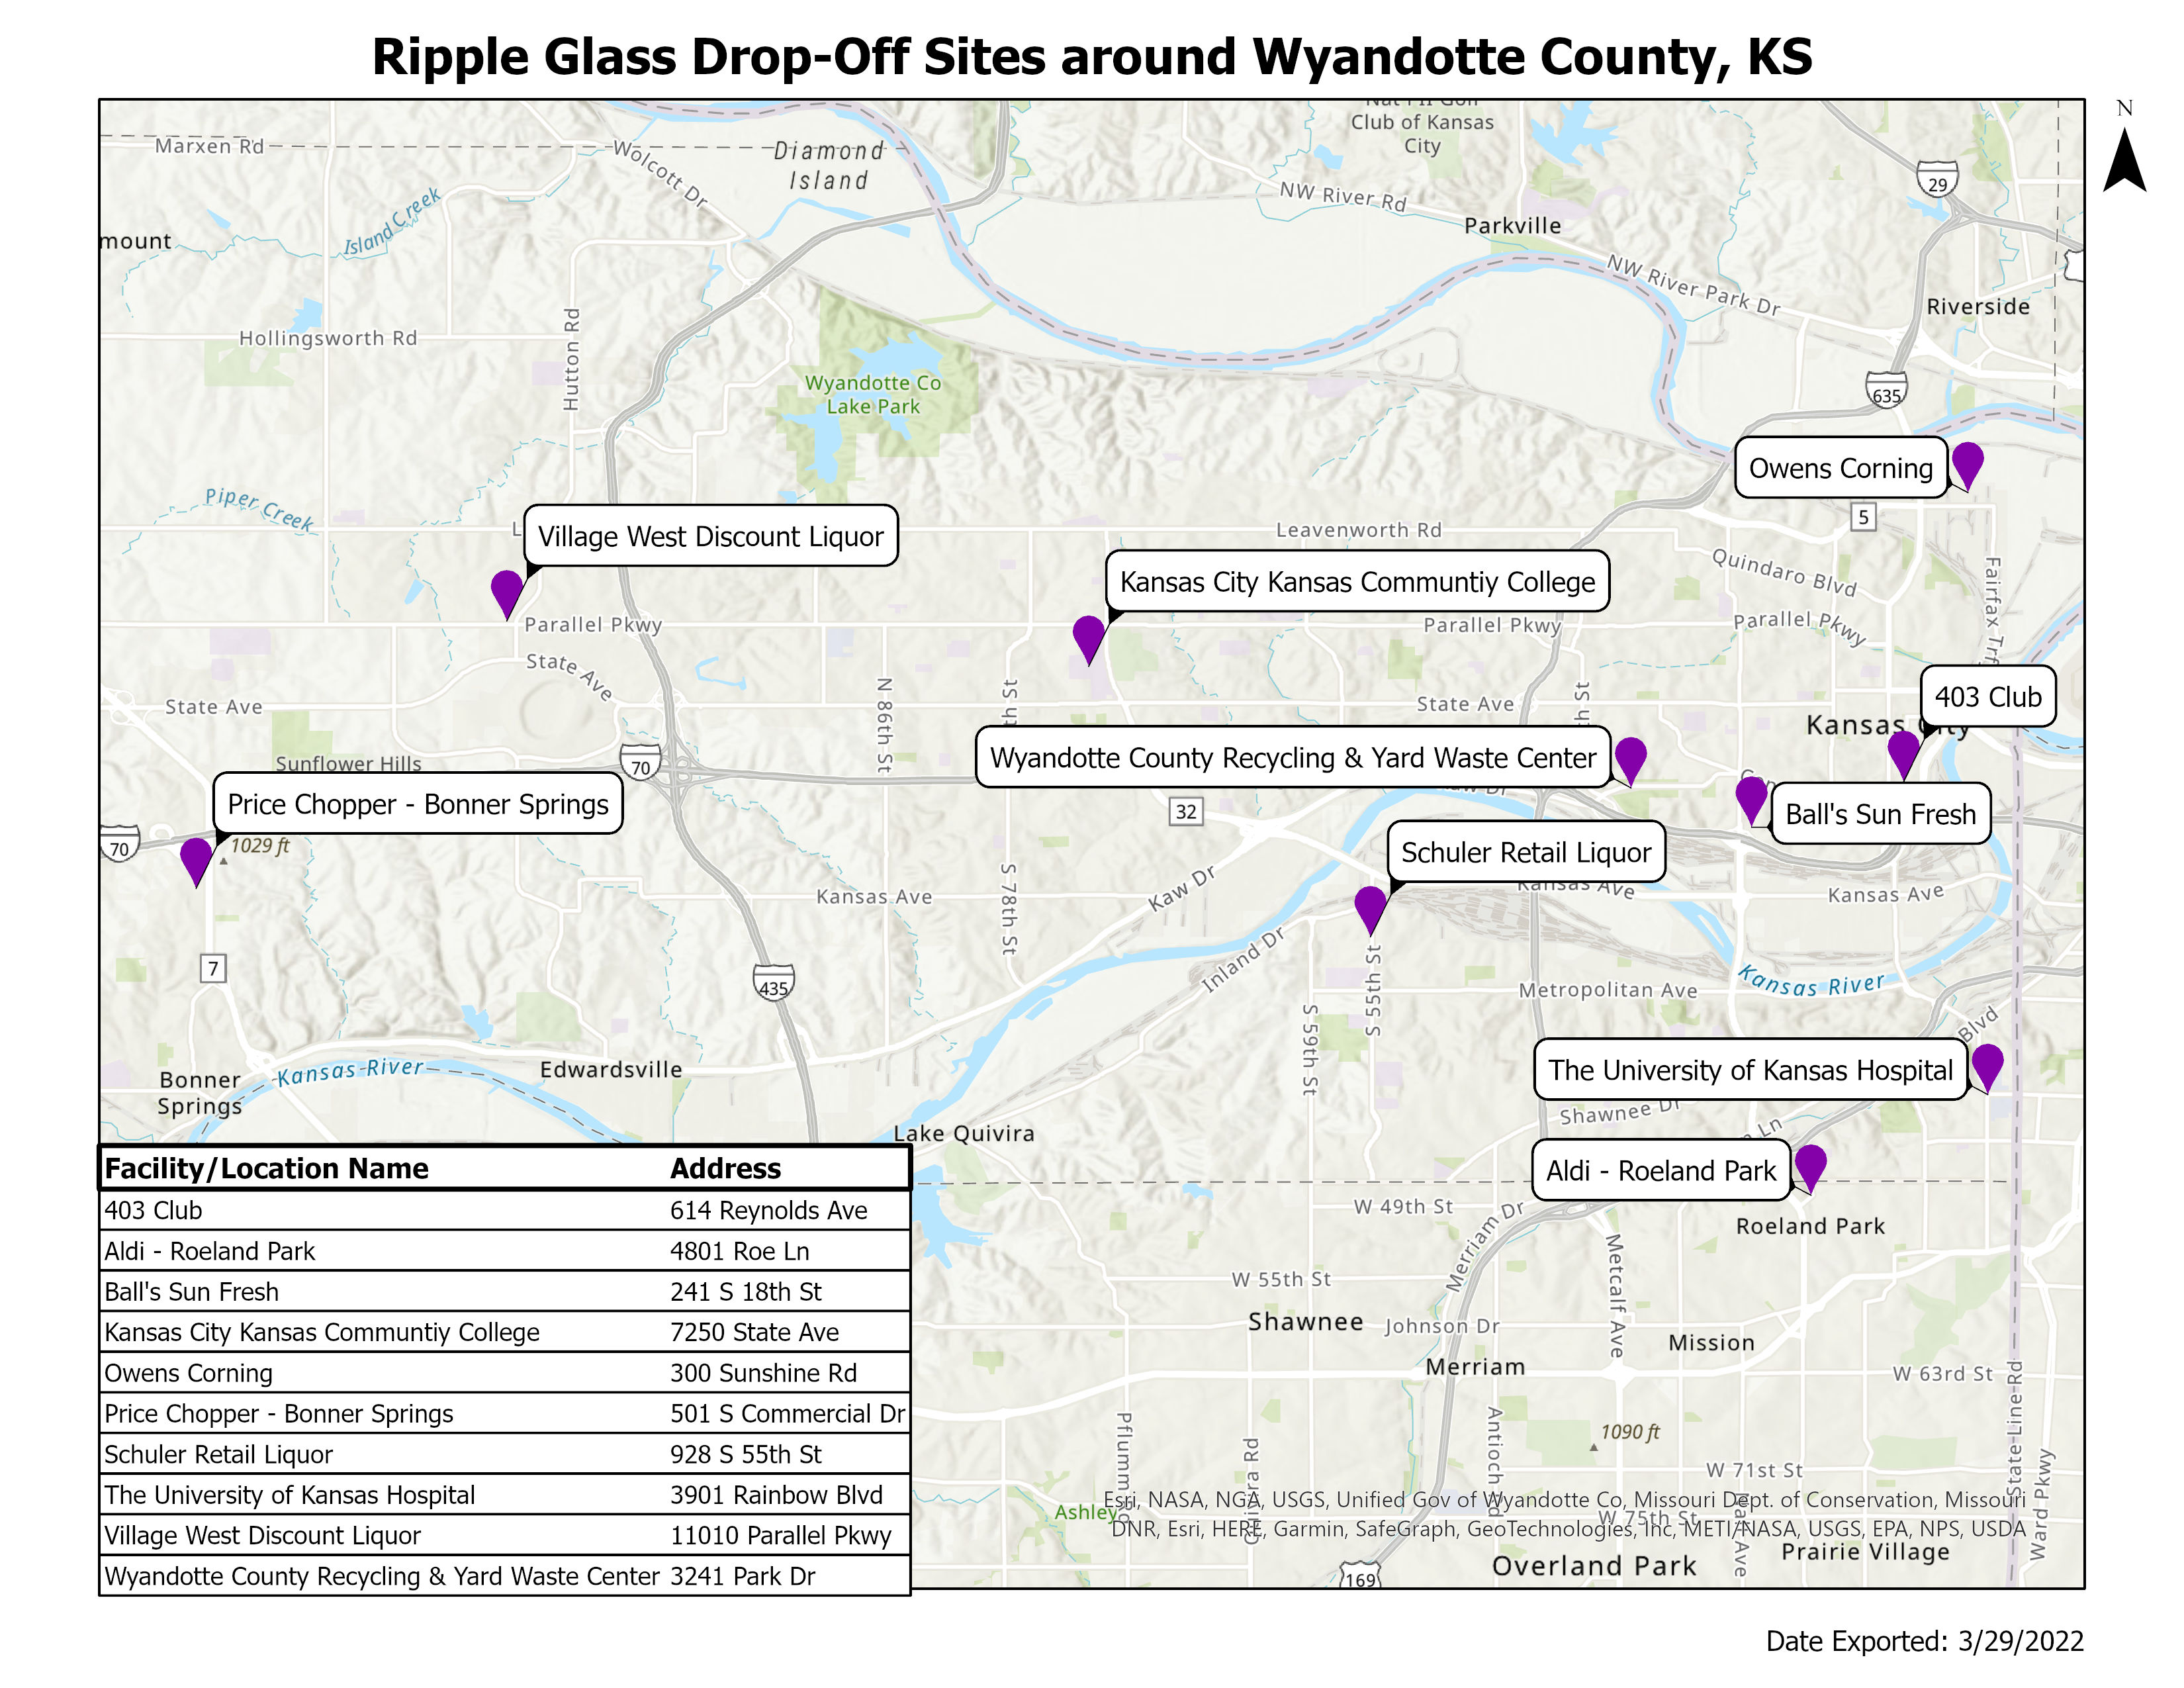 Ripple Glass Recycling Locations around Wyandotte County, KS